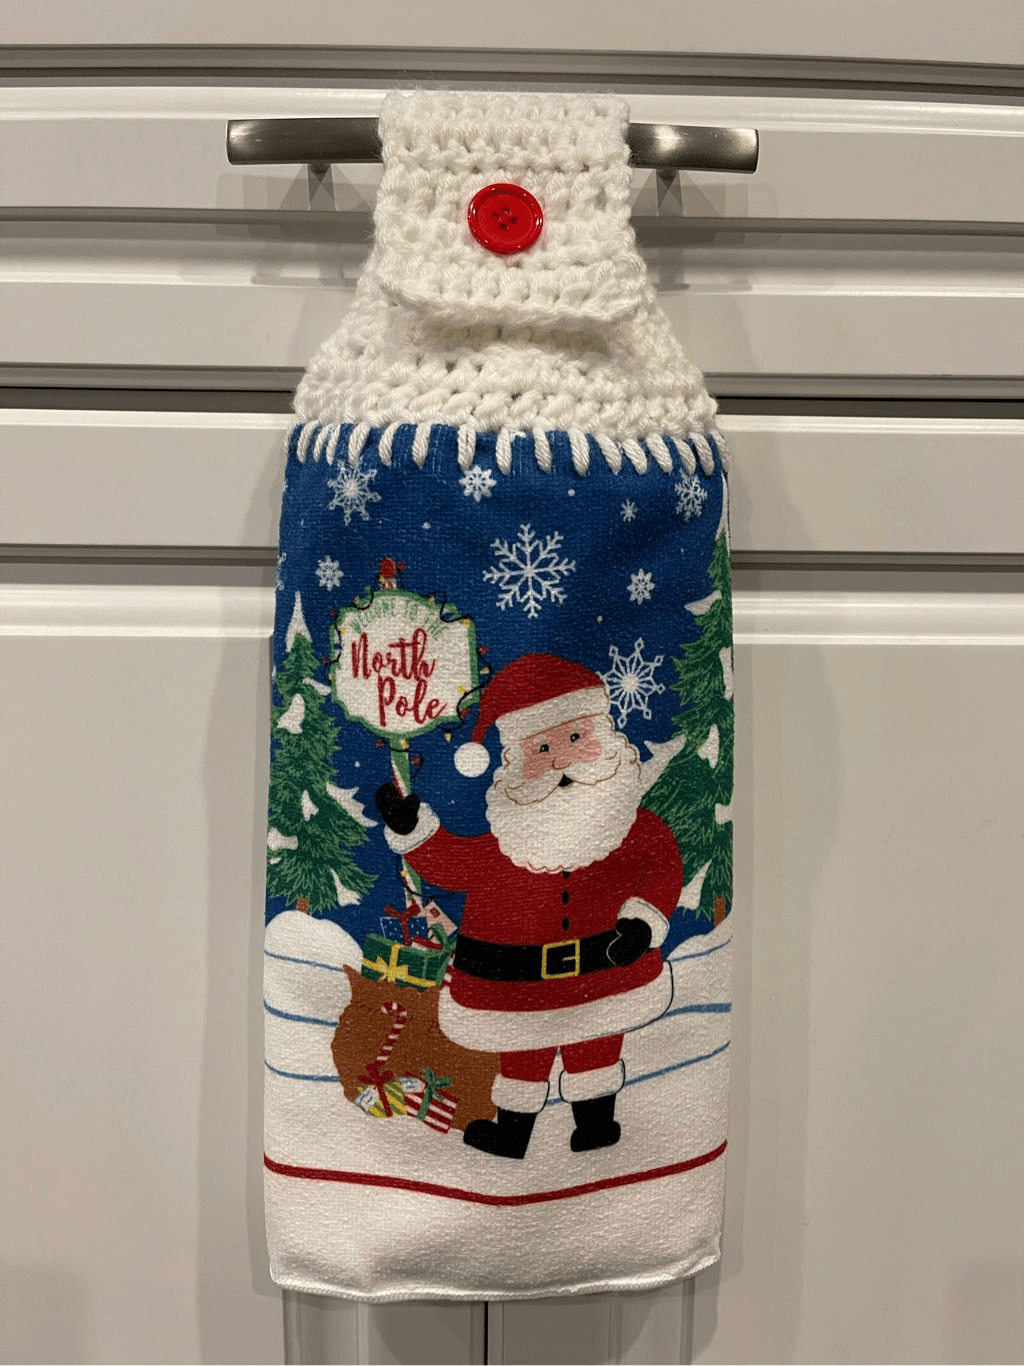 Crochet Top Kitchen Towel- Santa Claus and North Pole Handmade